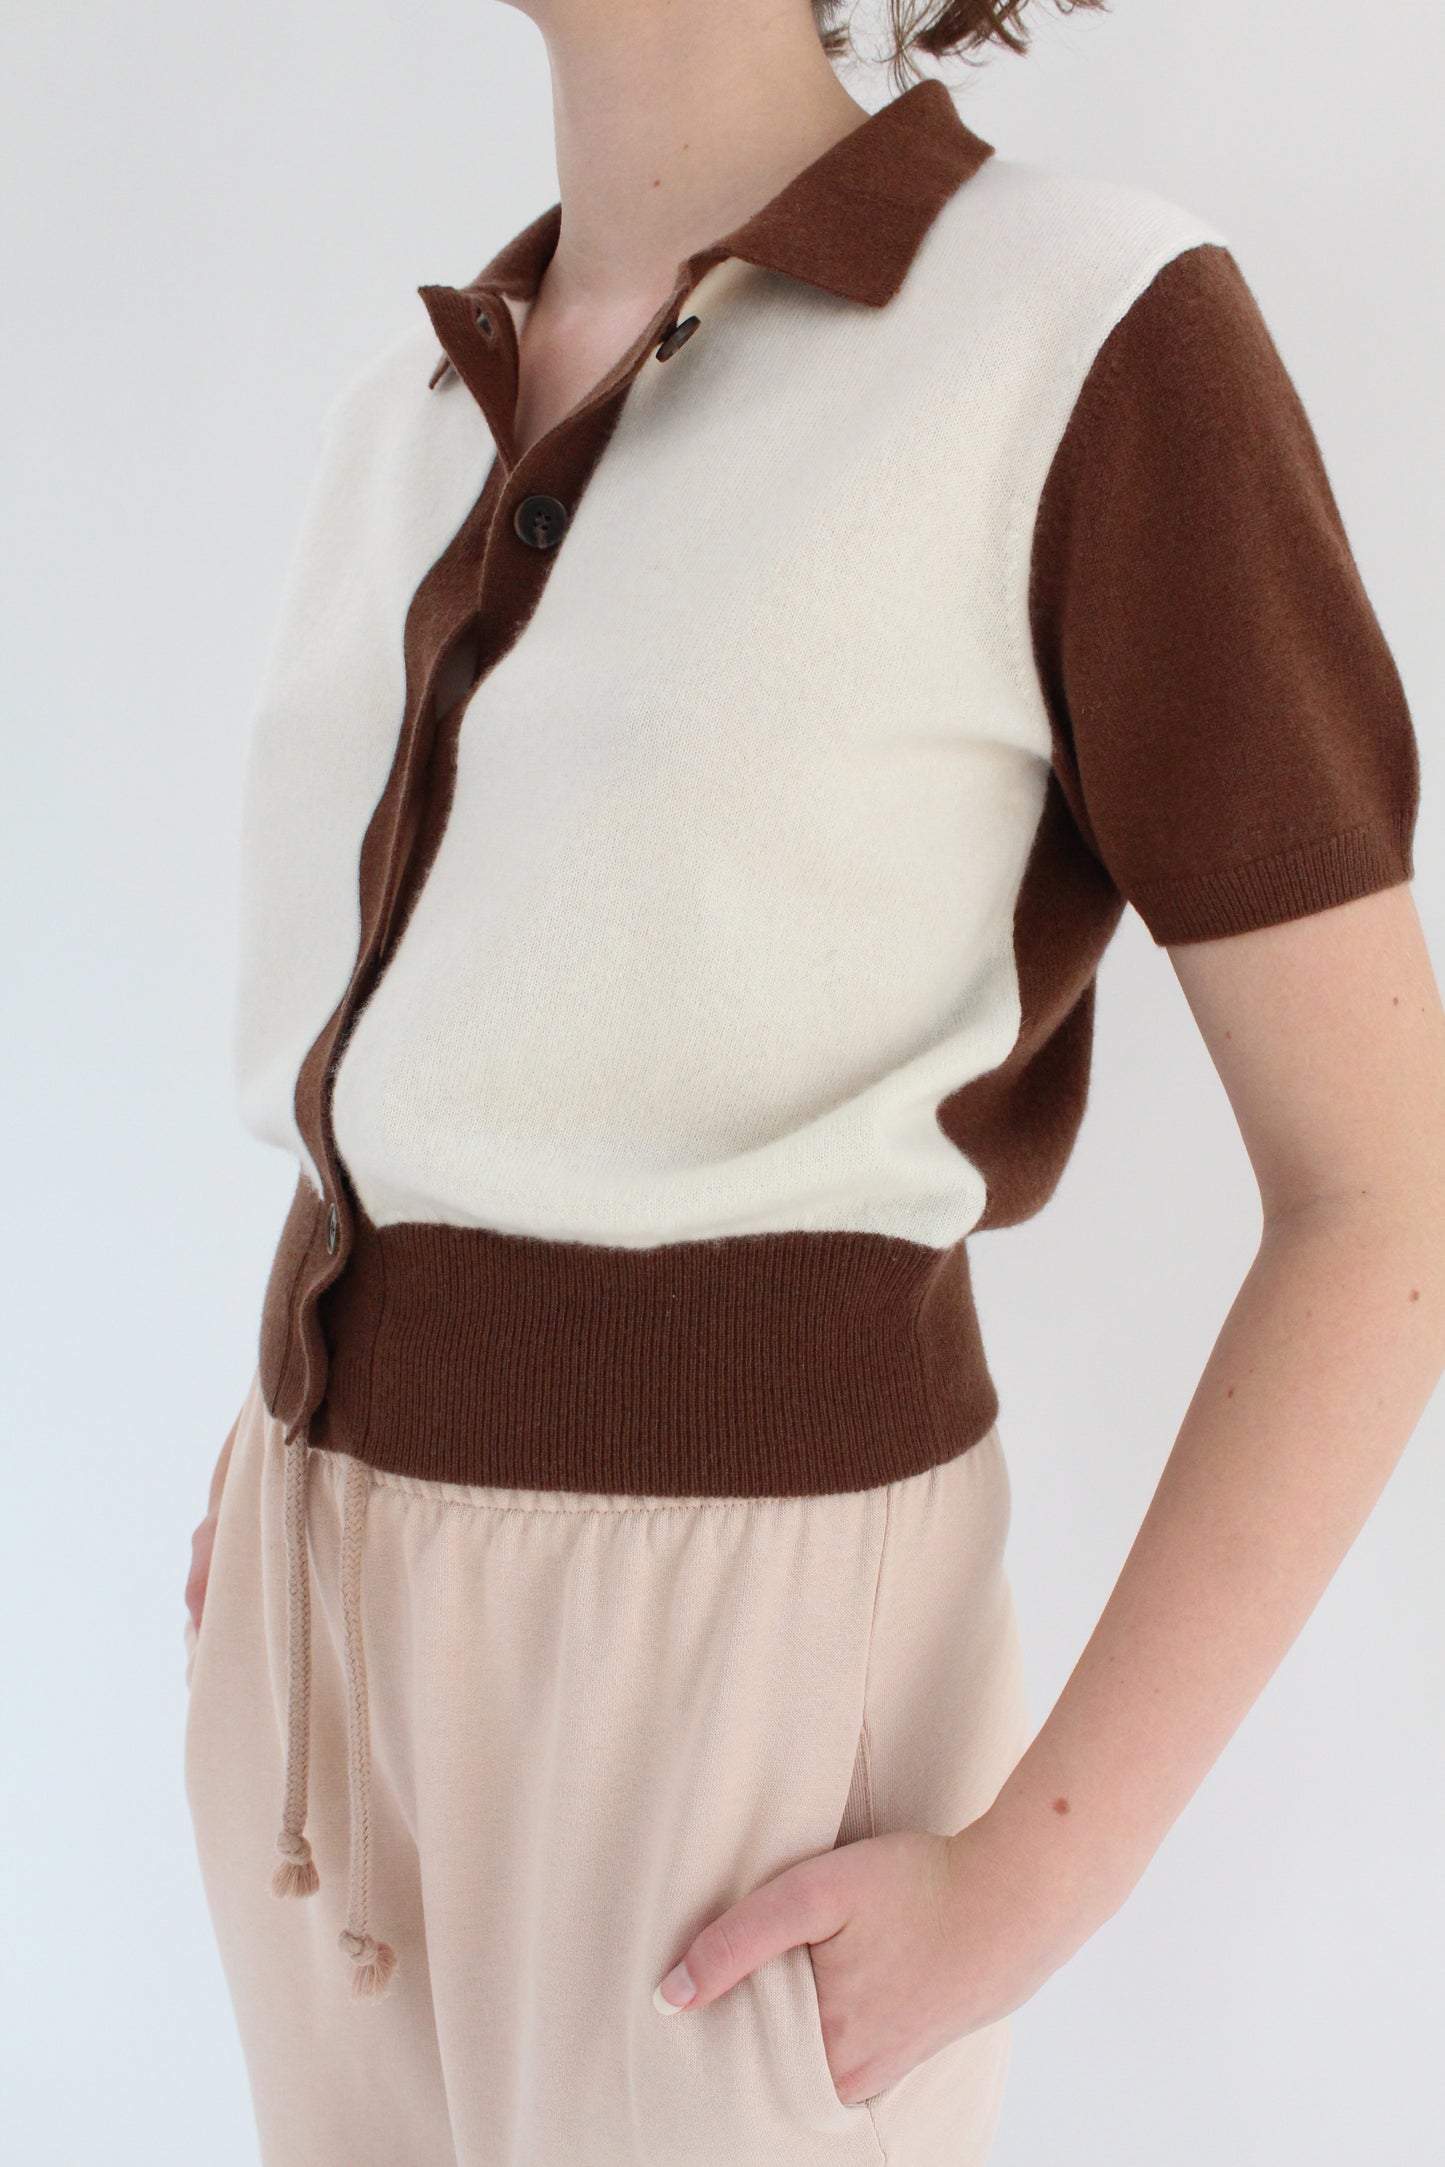 Beklina Fern Sweater Blouse Ivory/Chocolate